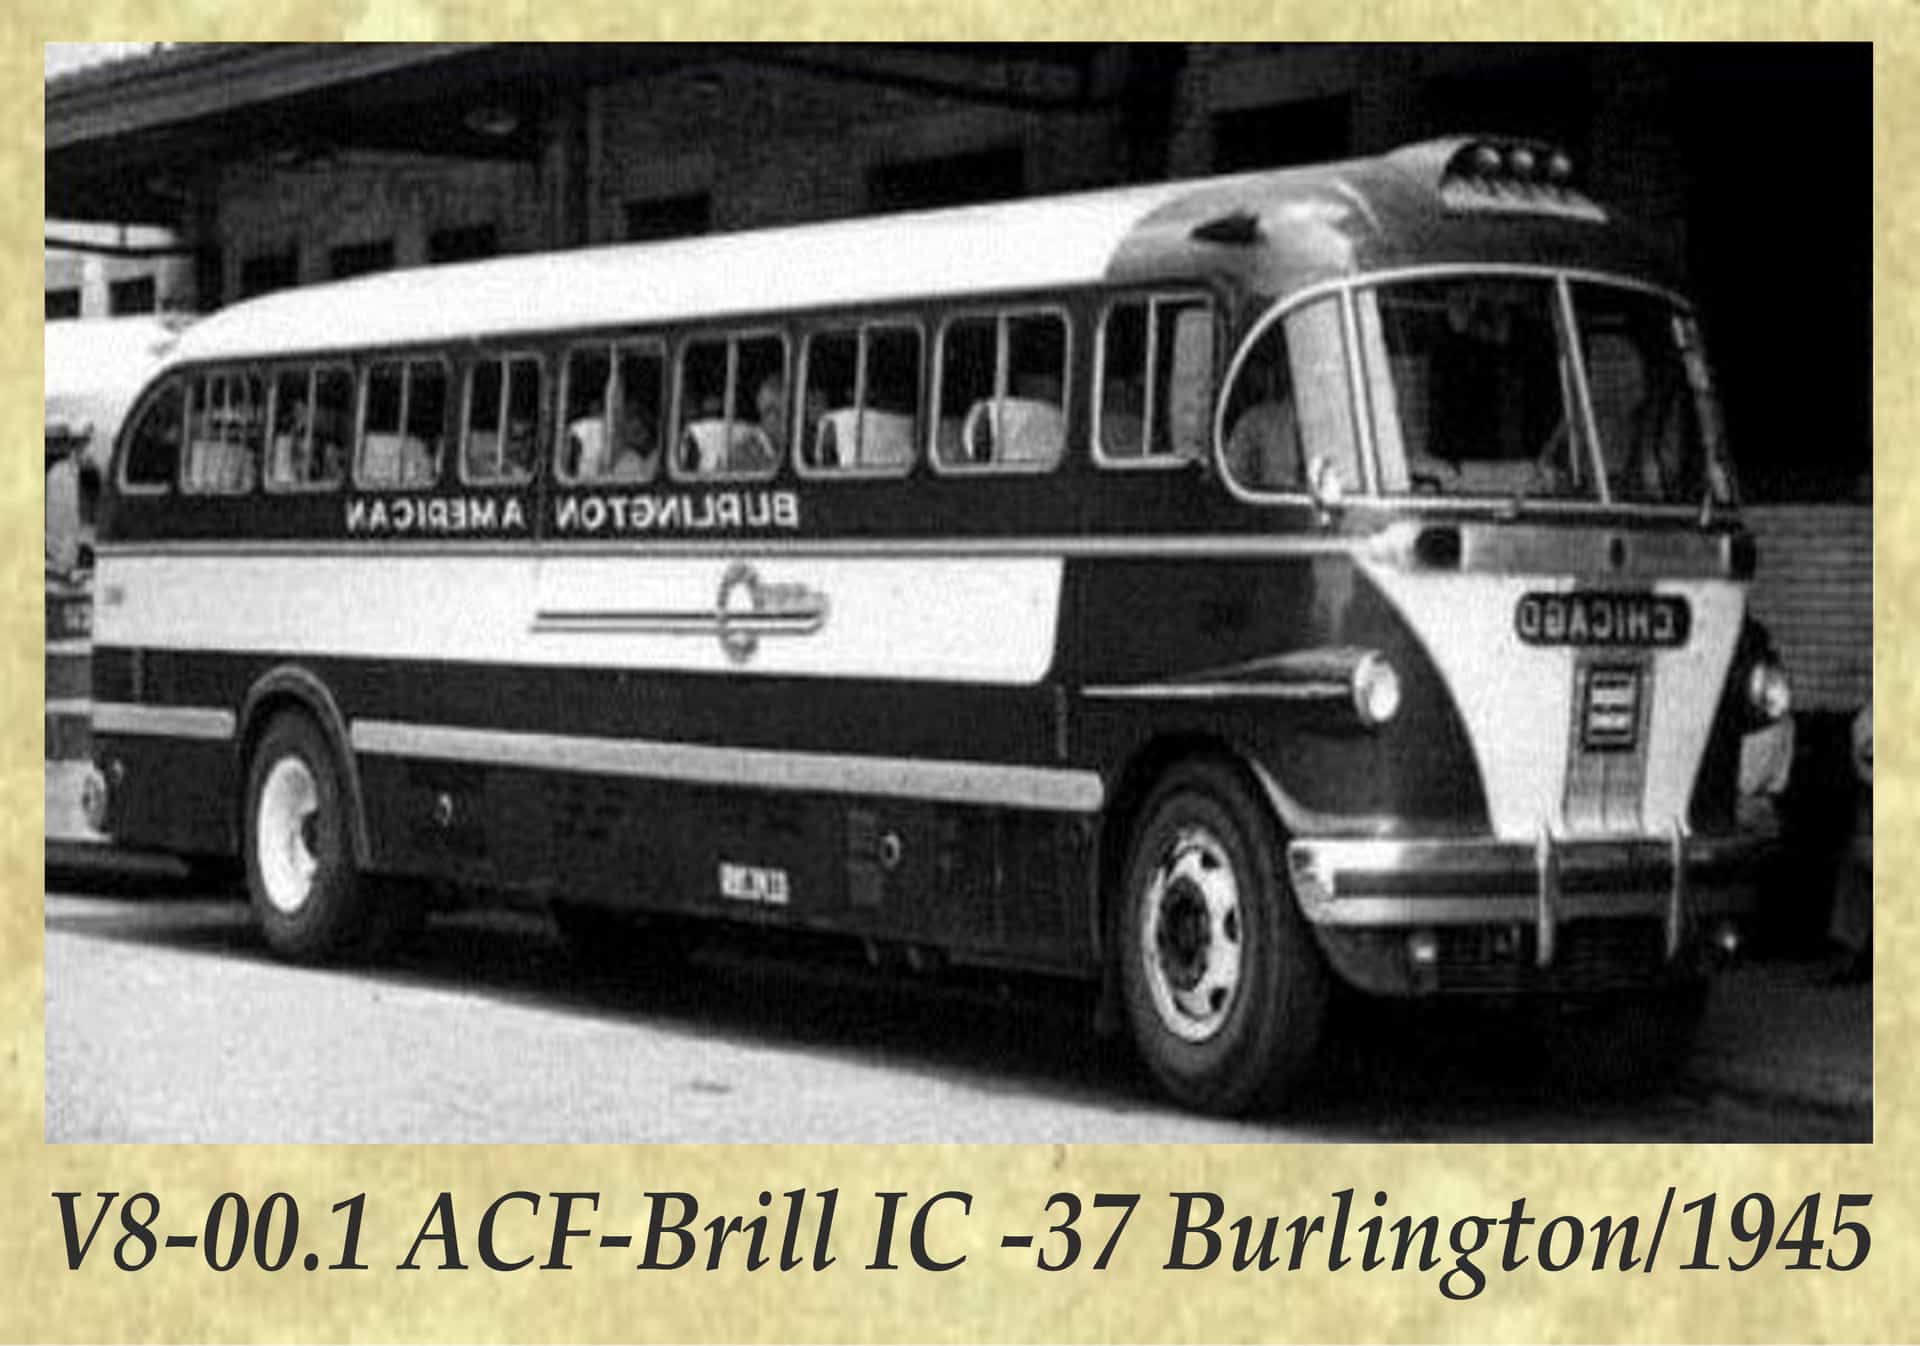 V8-001 ACF-Brill IC -37 Burlinton_1945